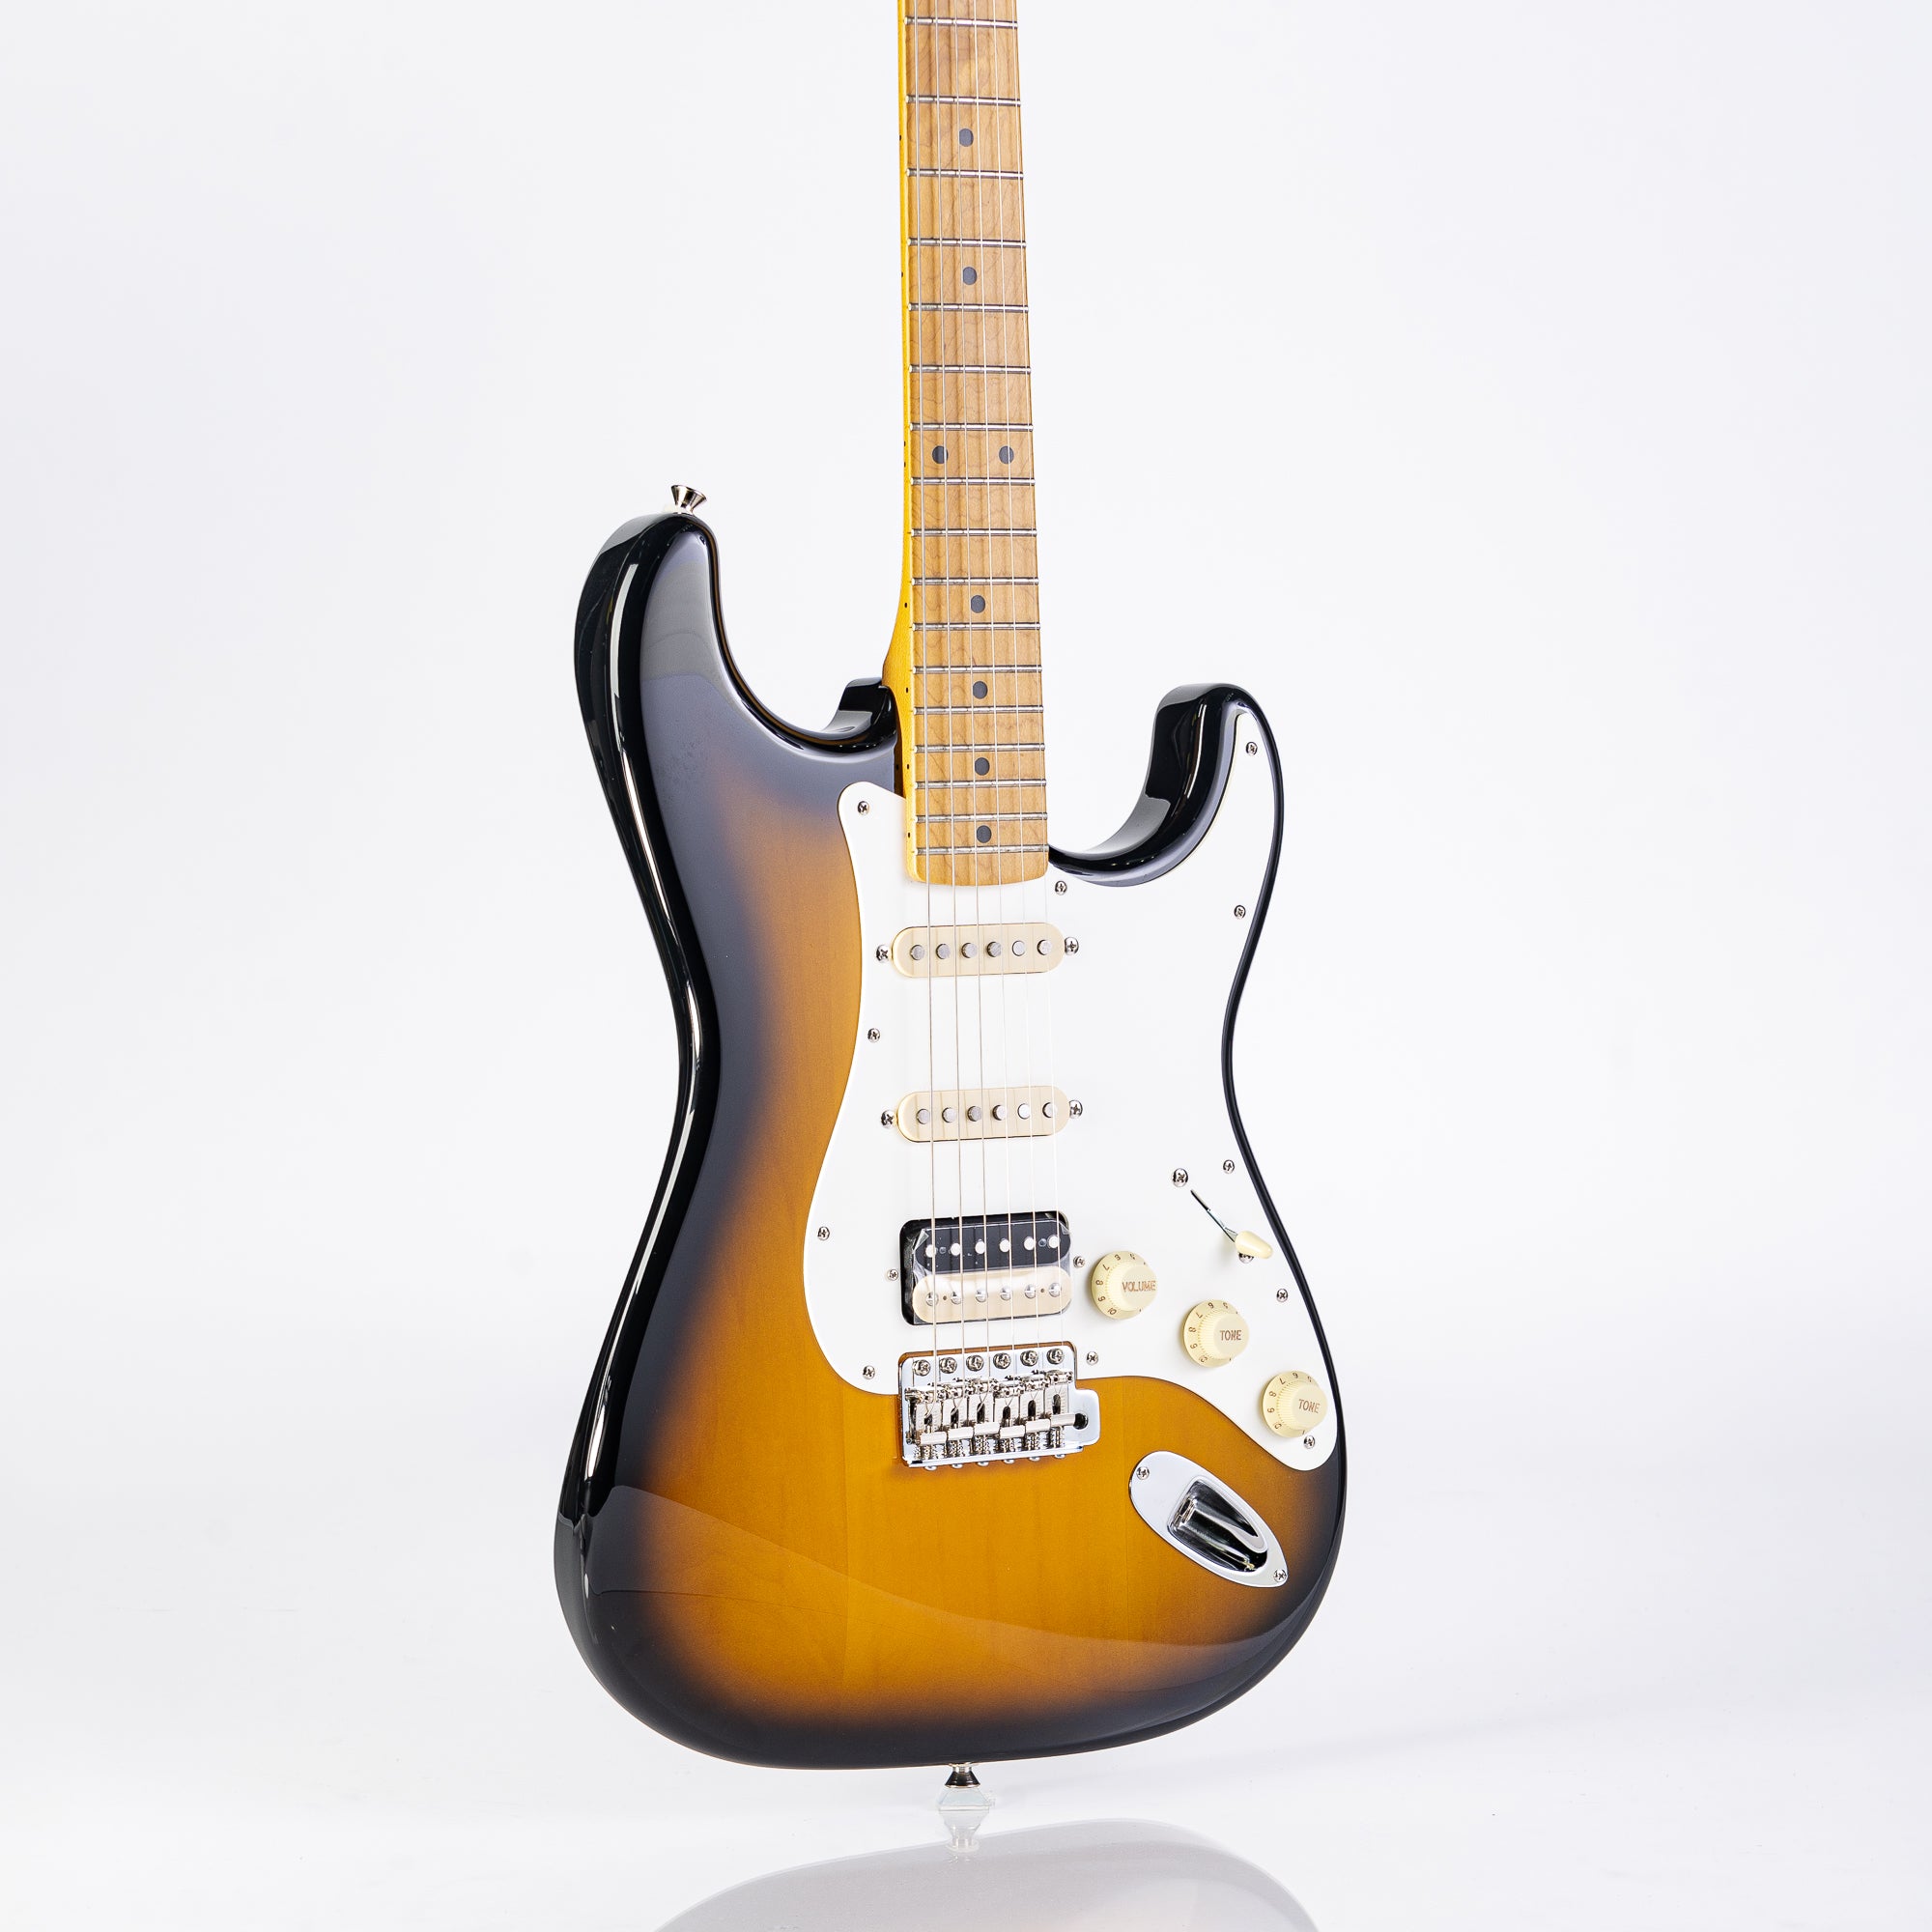 USED Fender JV Modified 50s Stratocaster with Maple Fingerboard - 2-Color Sunburst